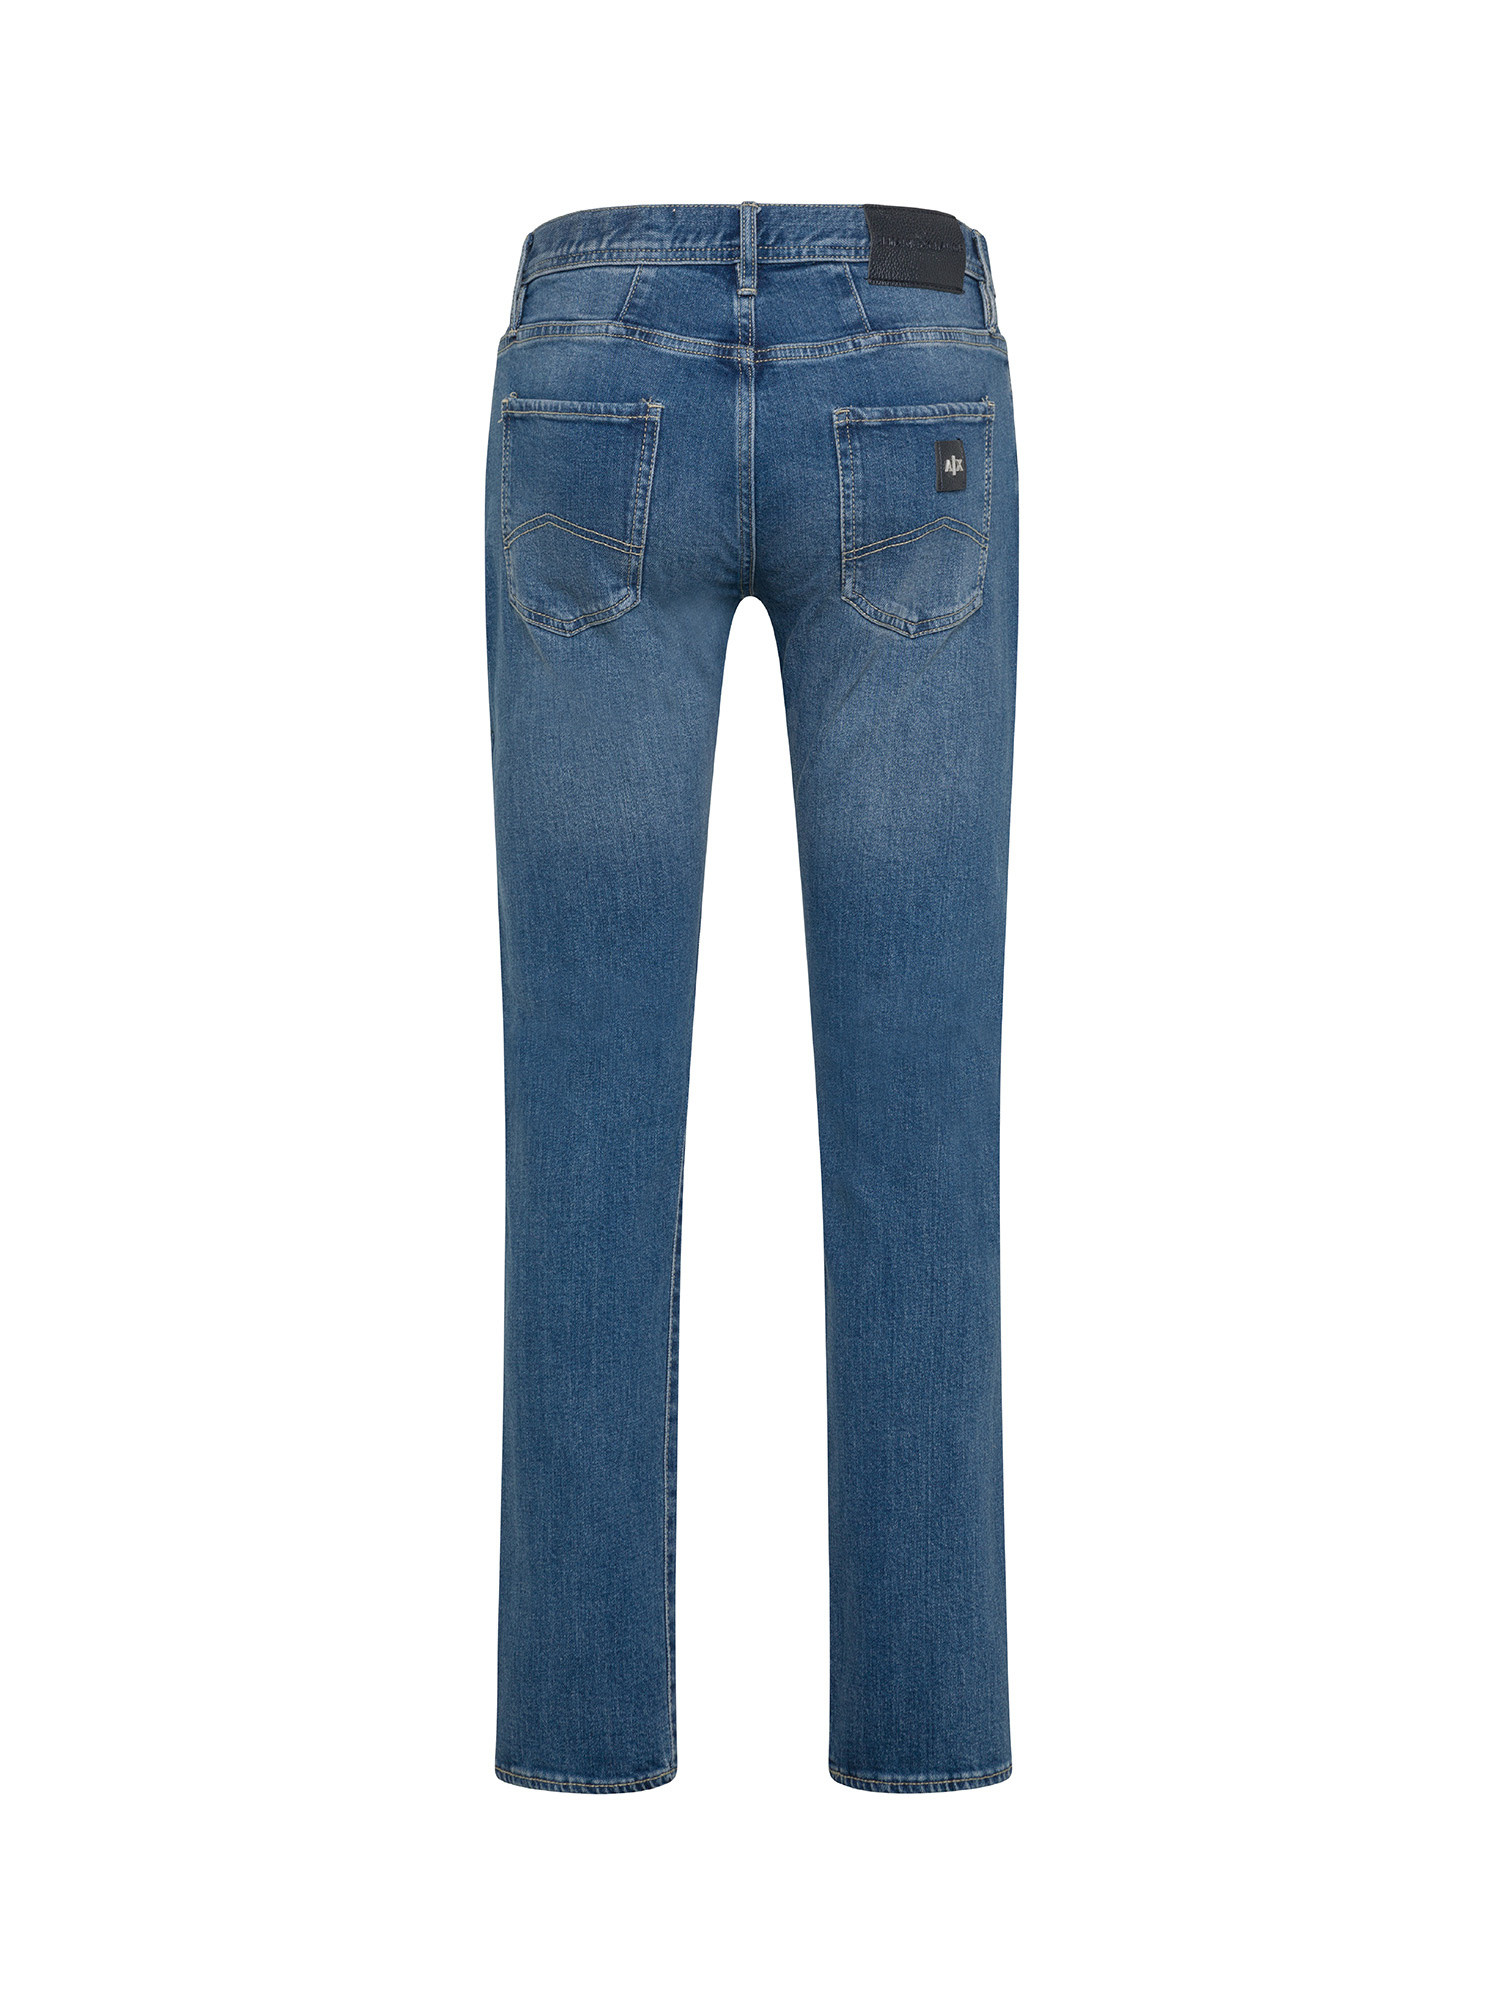 Armani Exchange - Jeans cinque tasche slim fit, Denim, large image number 1